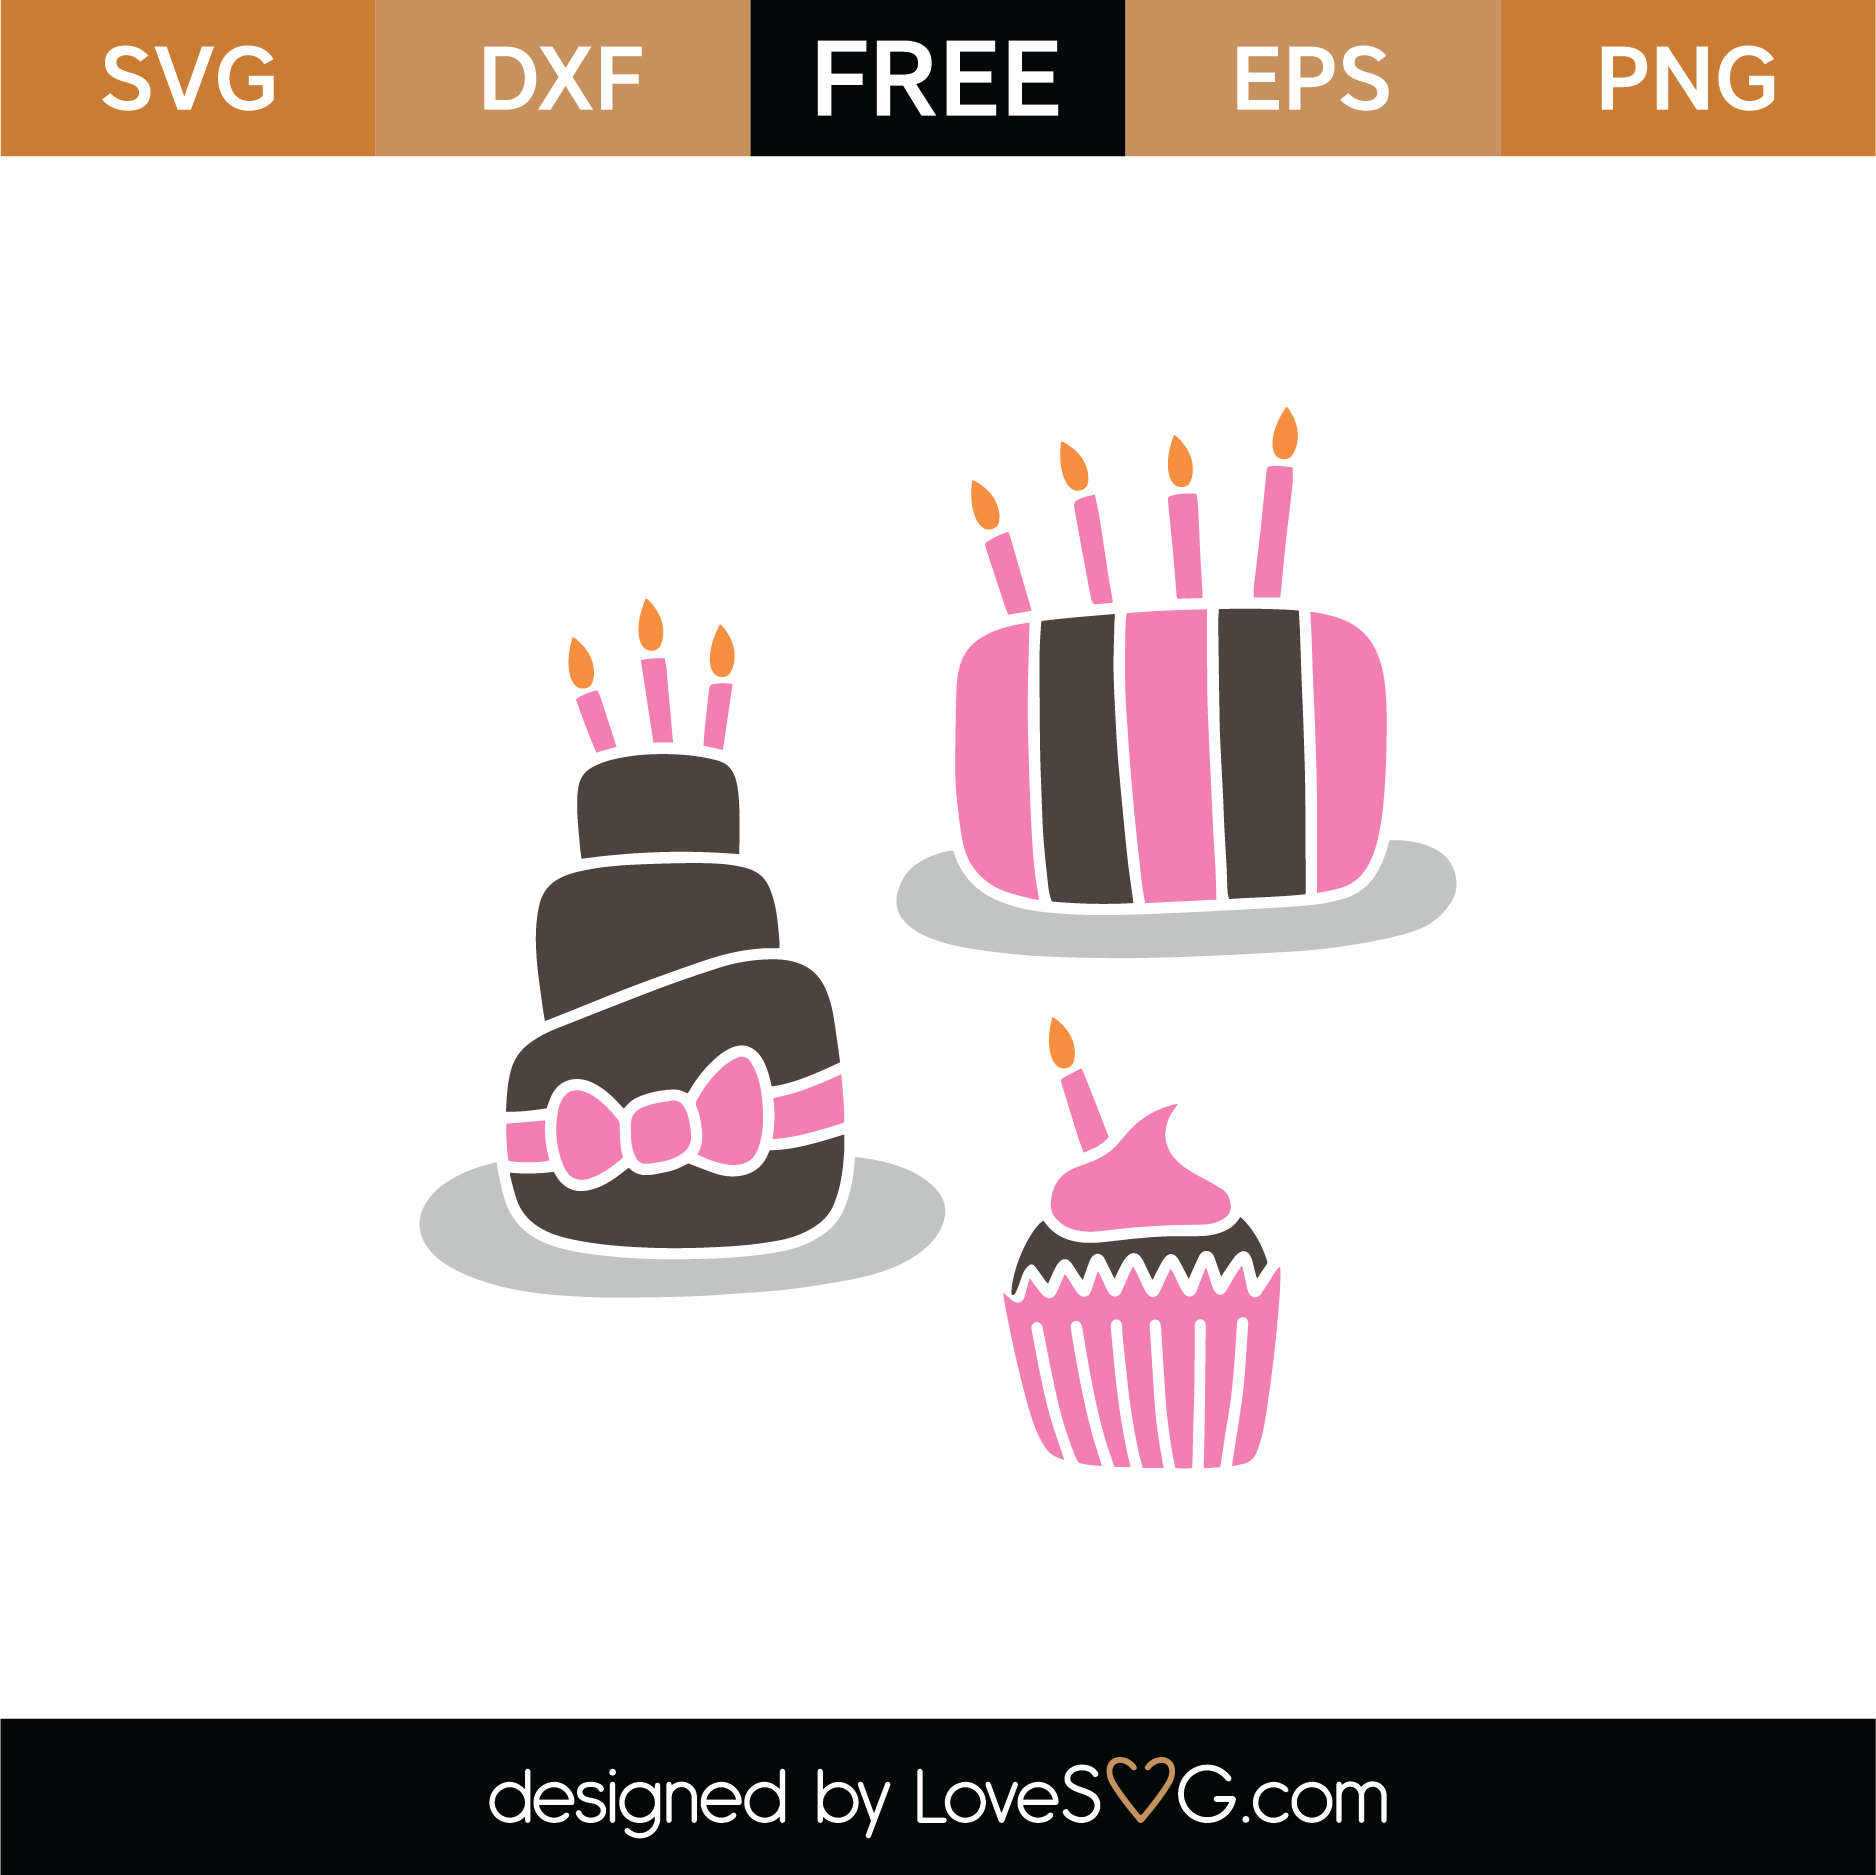 Download Free Birthday Cakes SVG Cut File | Lovesvg.com